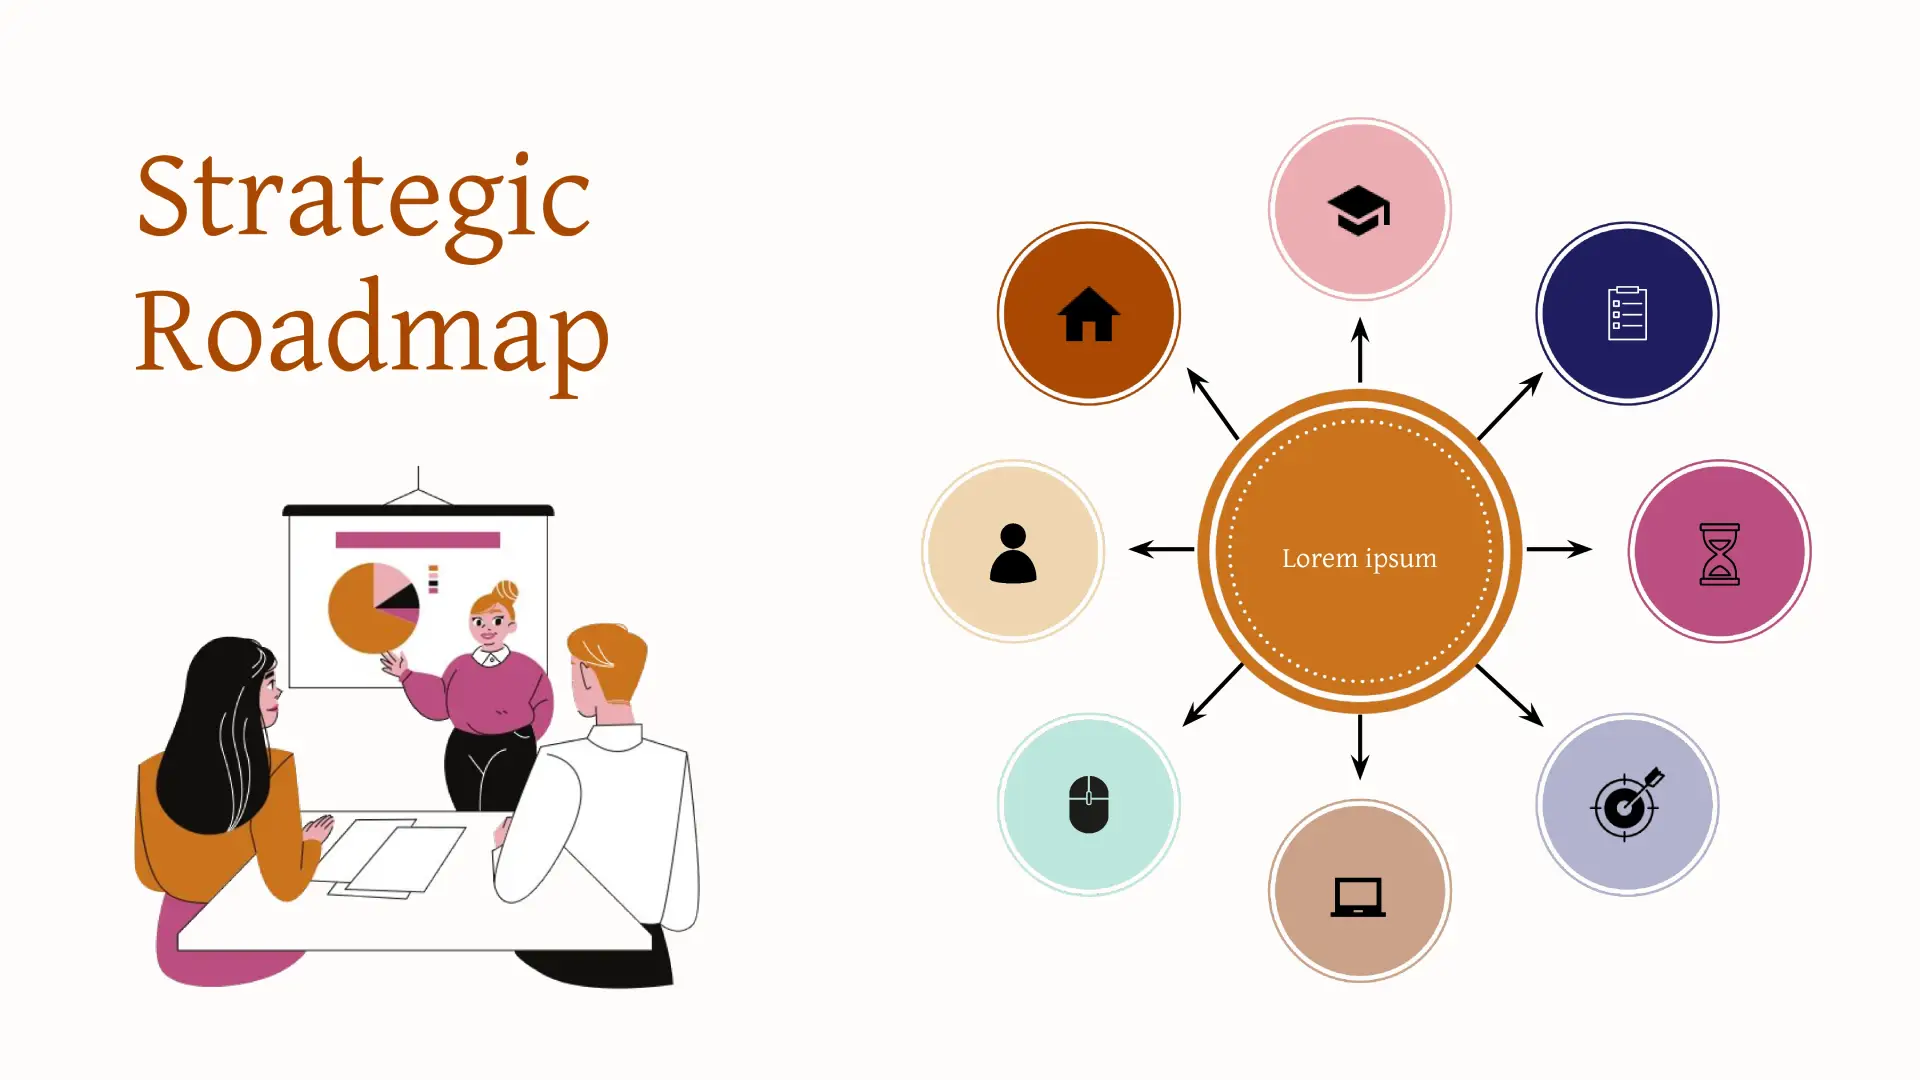 Strategic Roadmap Template